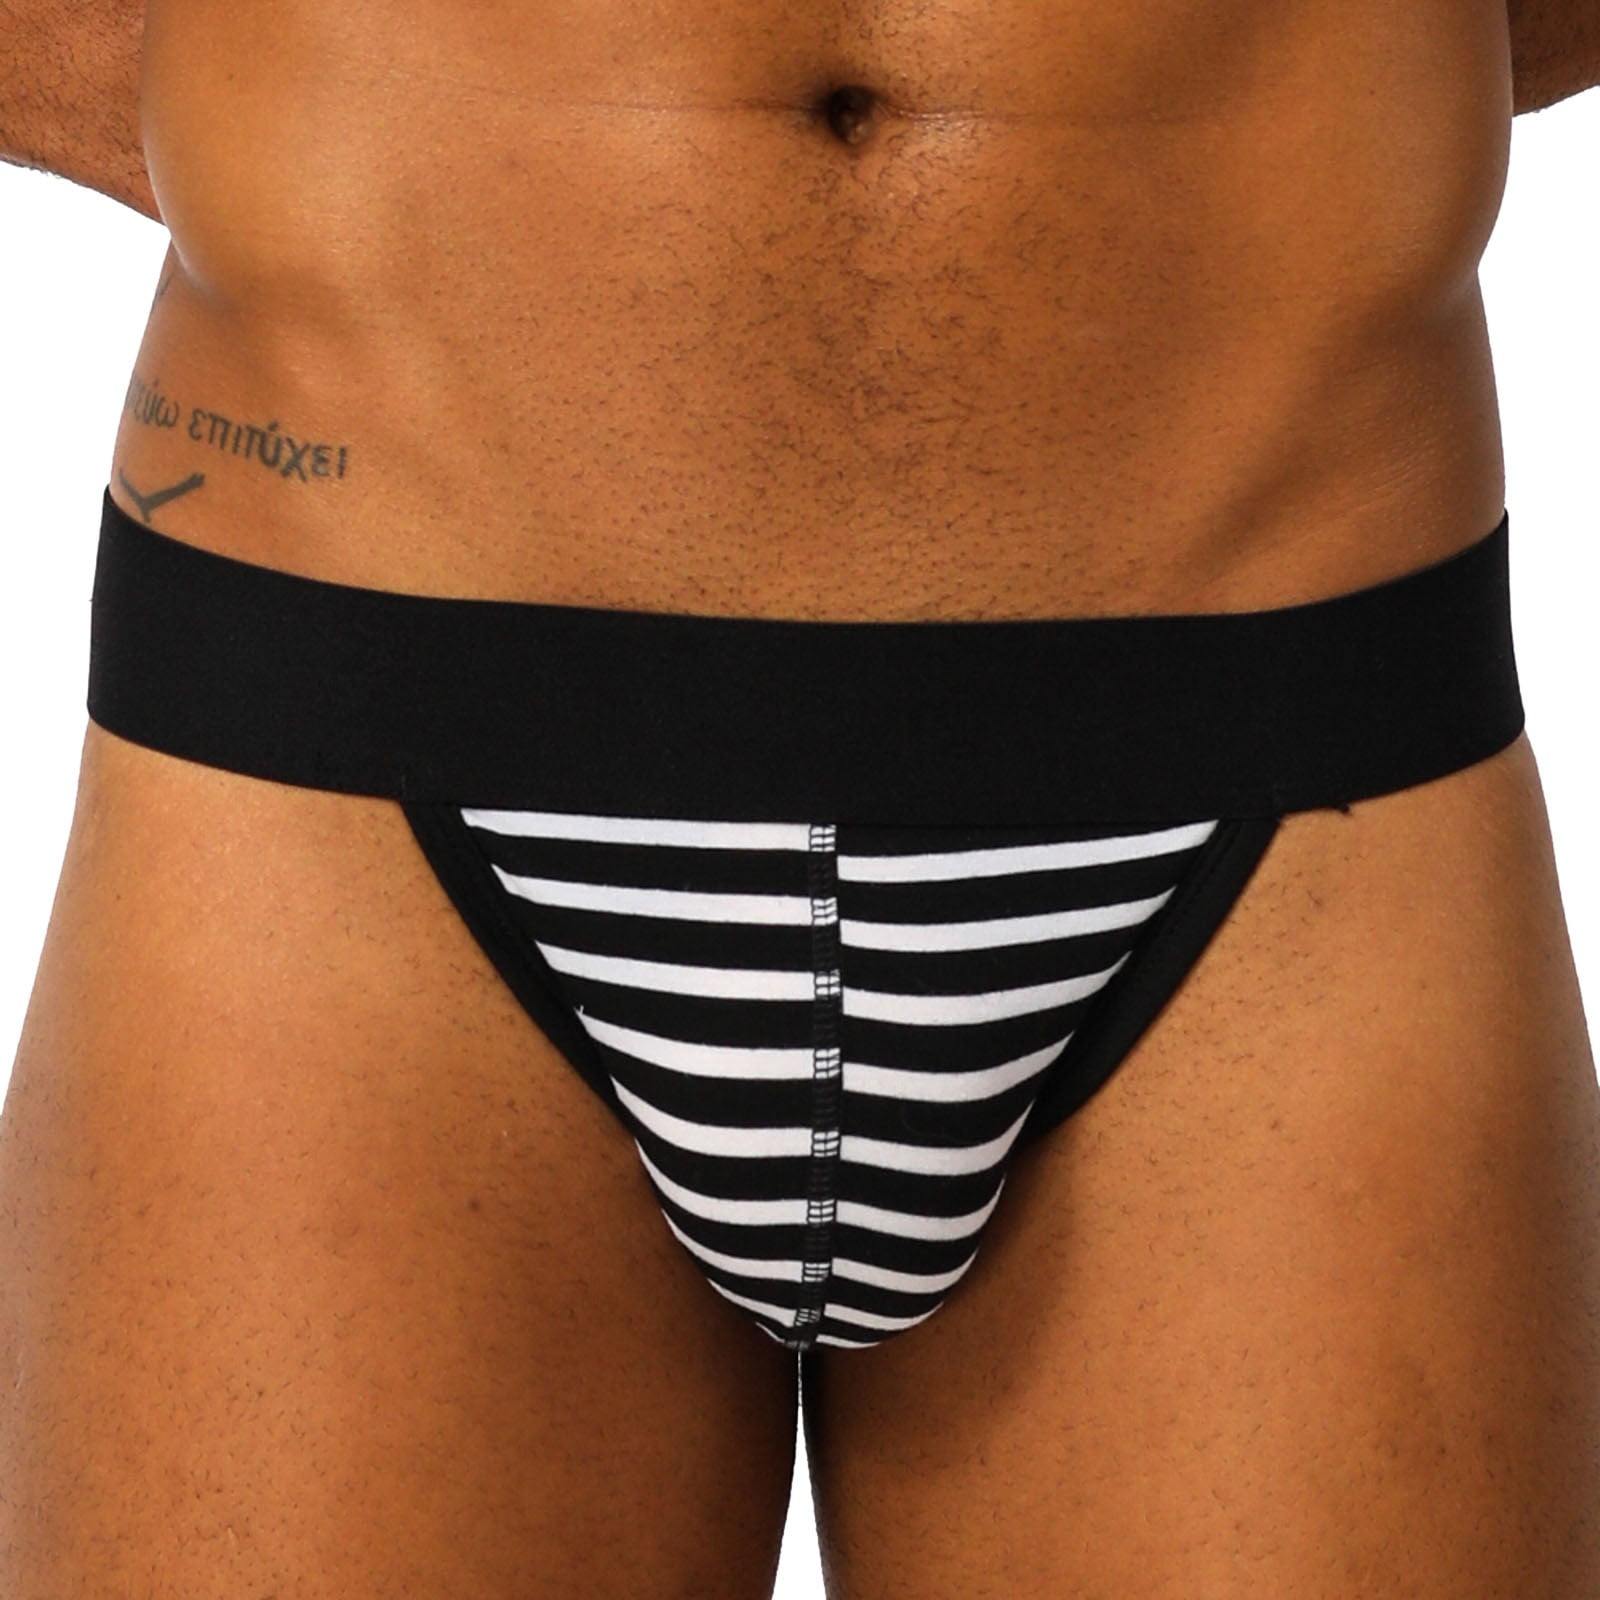 Pimfylm Underwear For Men Boxers Men's Jockstrap Underwear Breathable Mesh  Supporter Cotton Pouch Jock Briefs Black Medium 